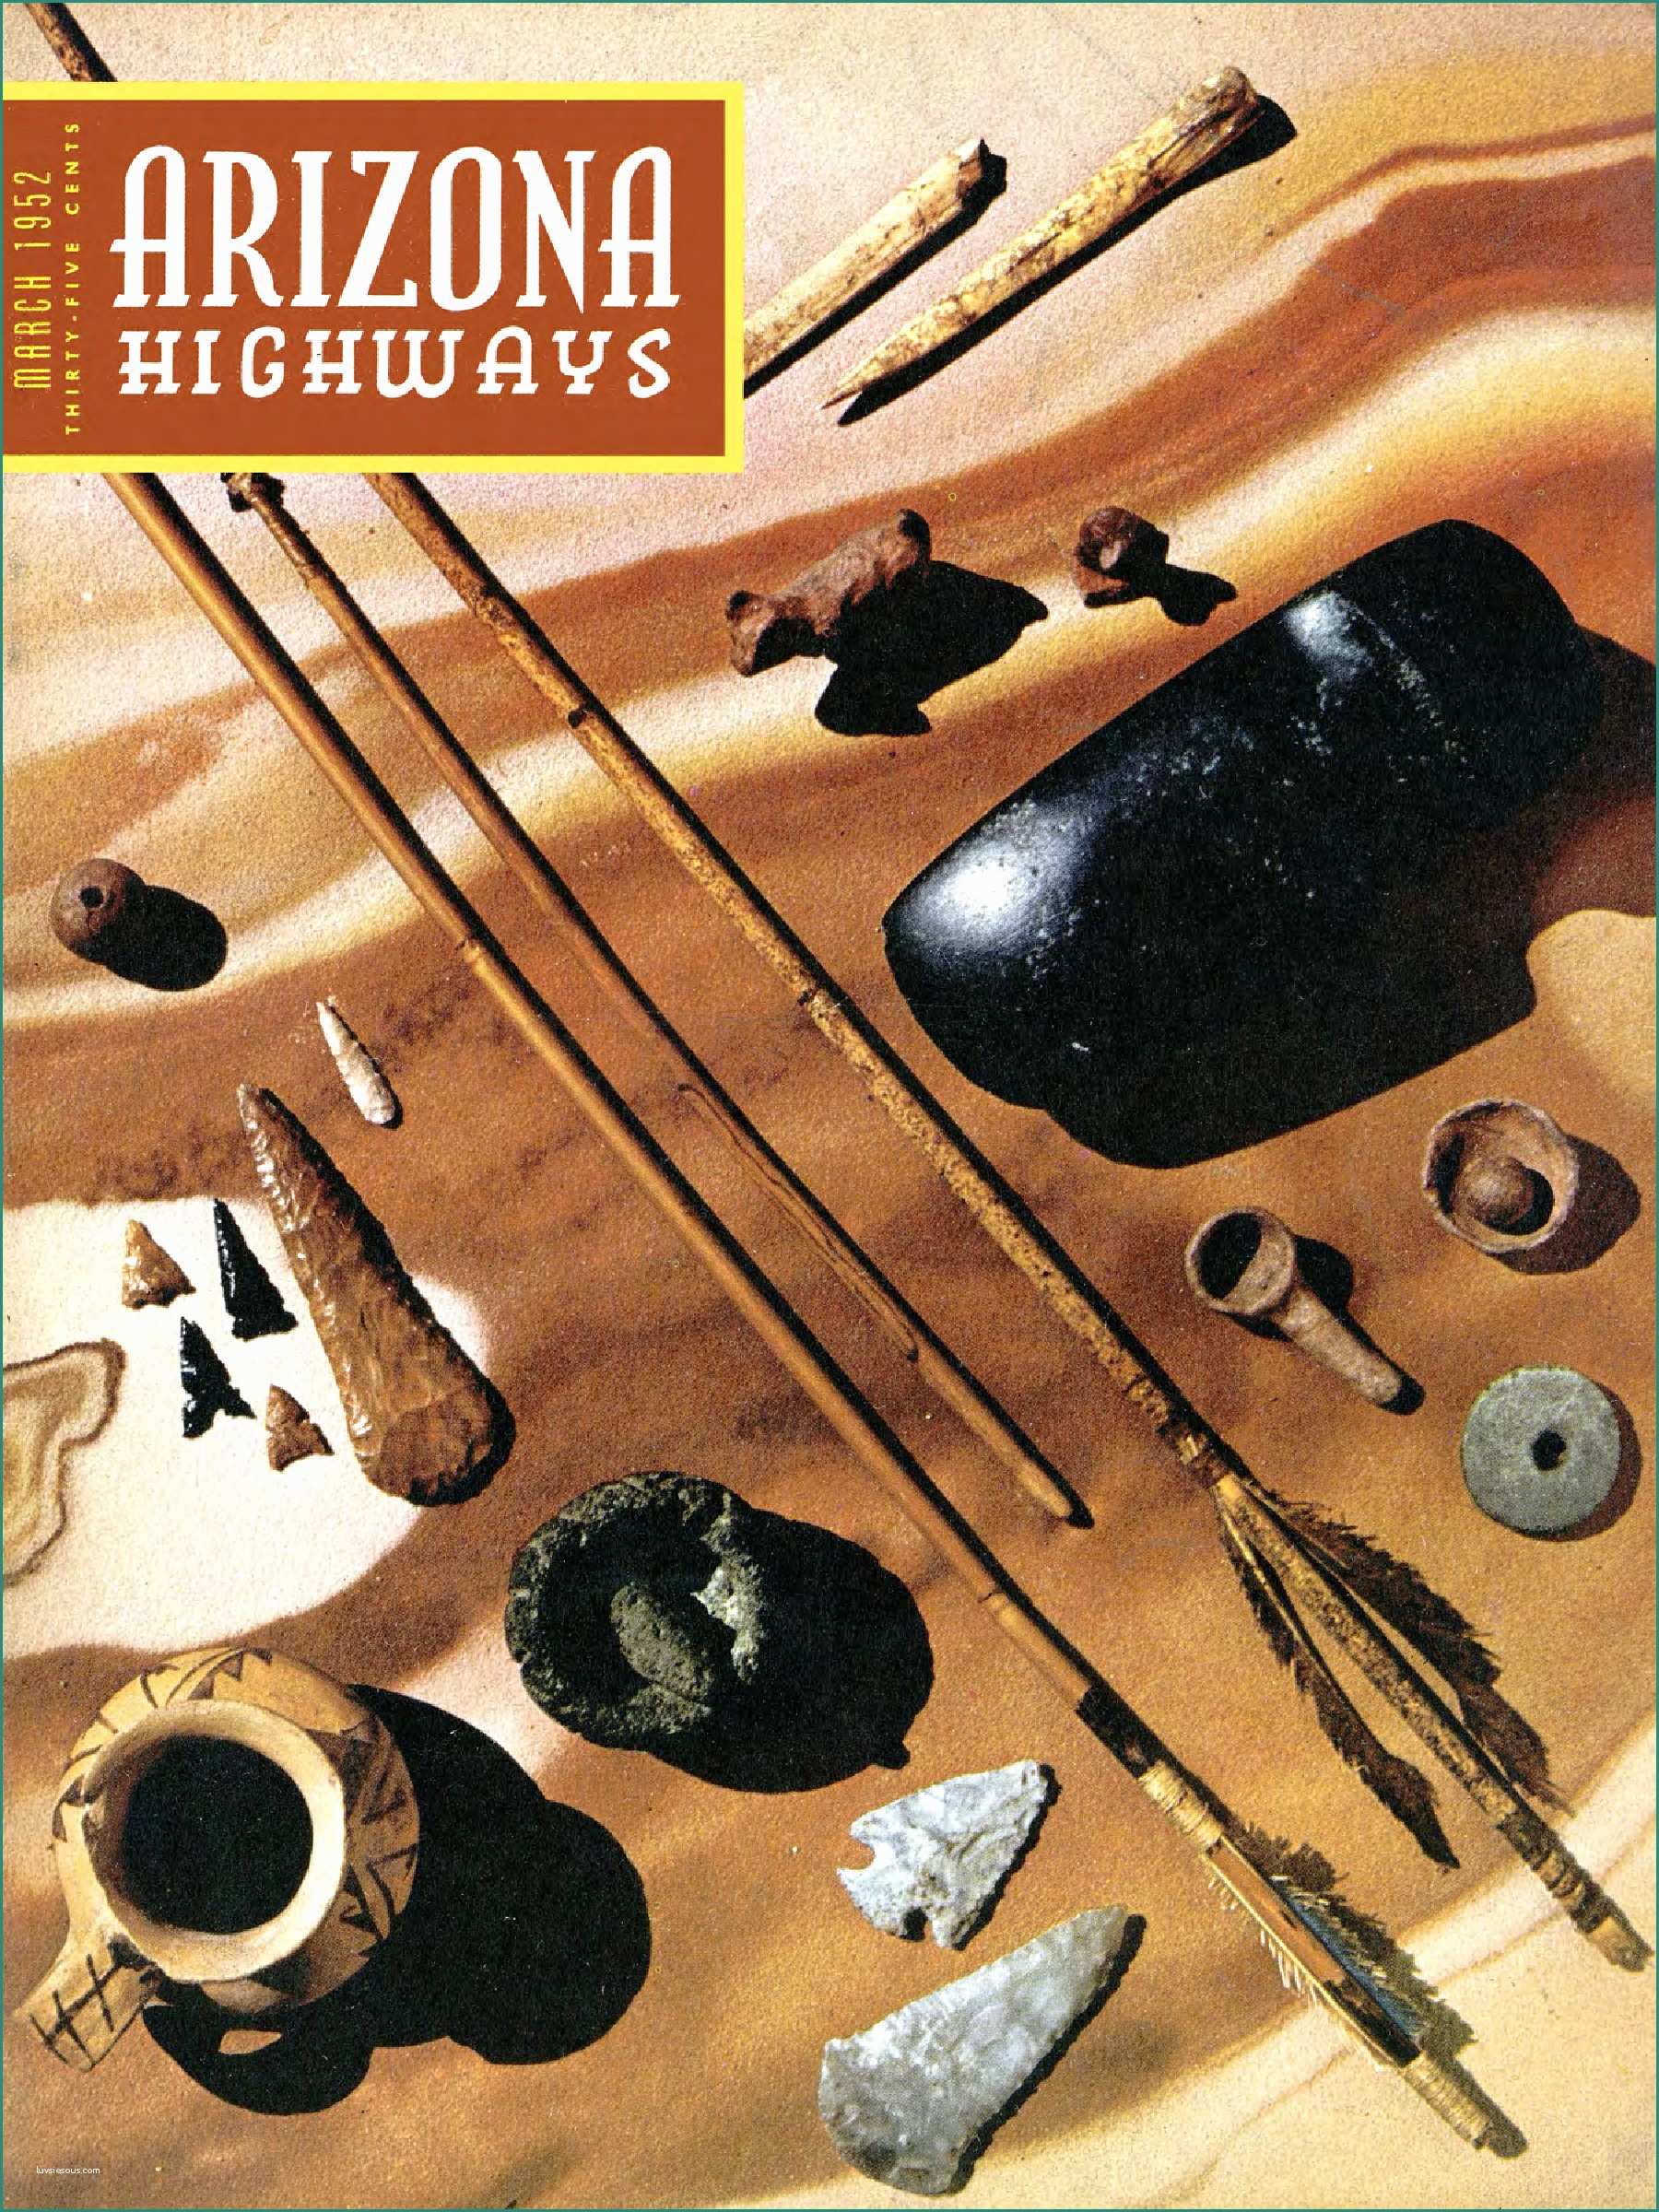 Di Fina Case Mobili E Arizona Highways March 1952 Arizona Highways Line Arizona